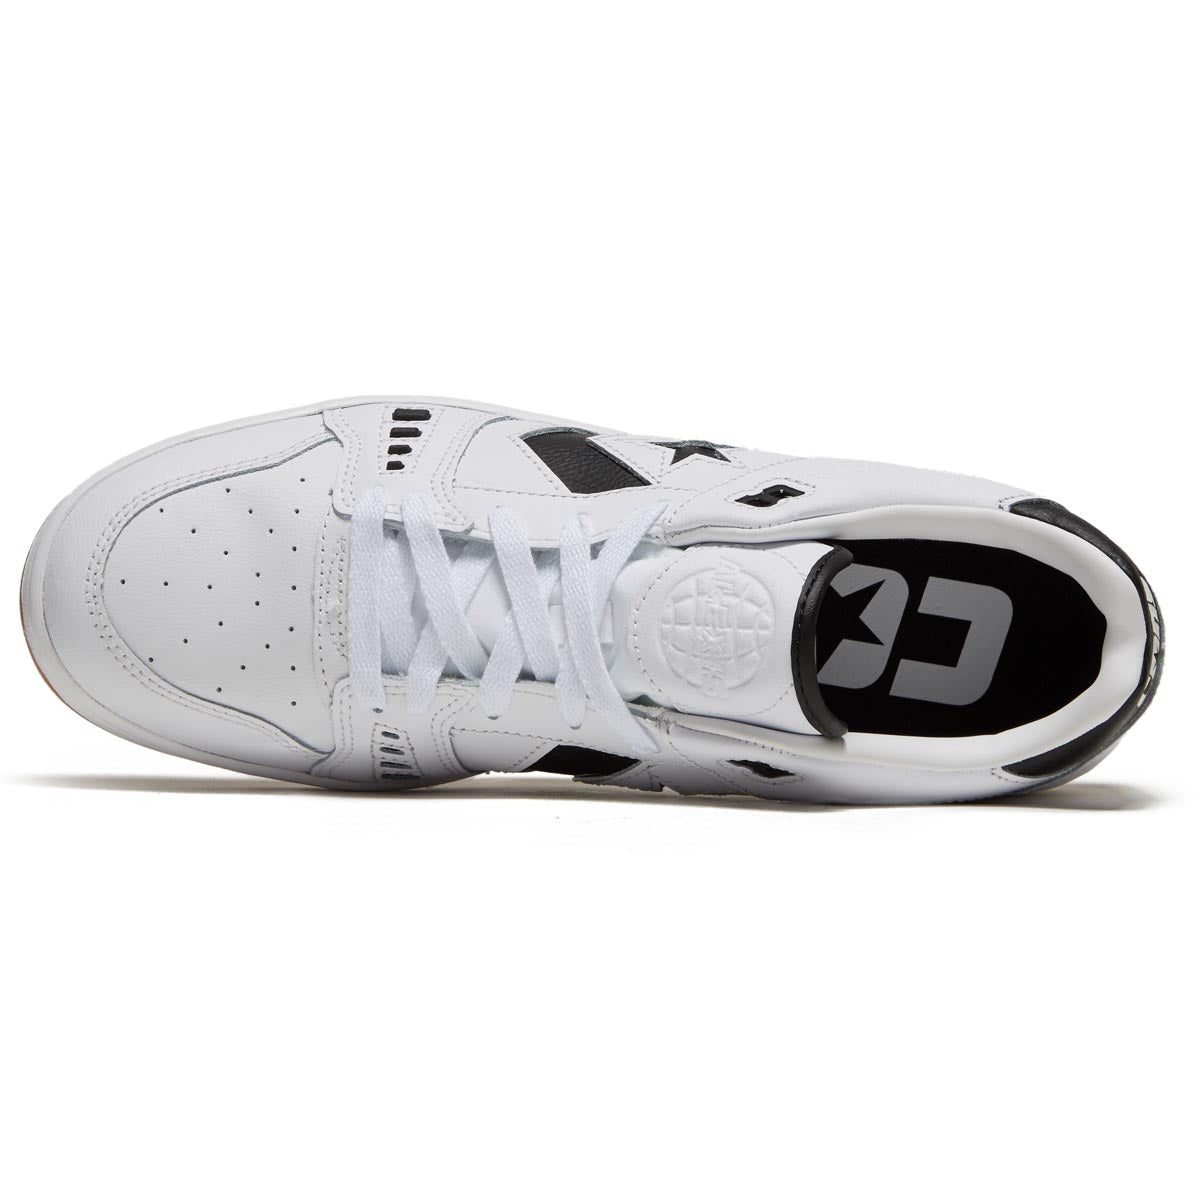 Converse AS-1 Pro Shoes - White/Black/White image 3